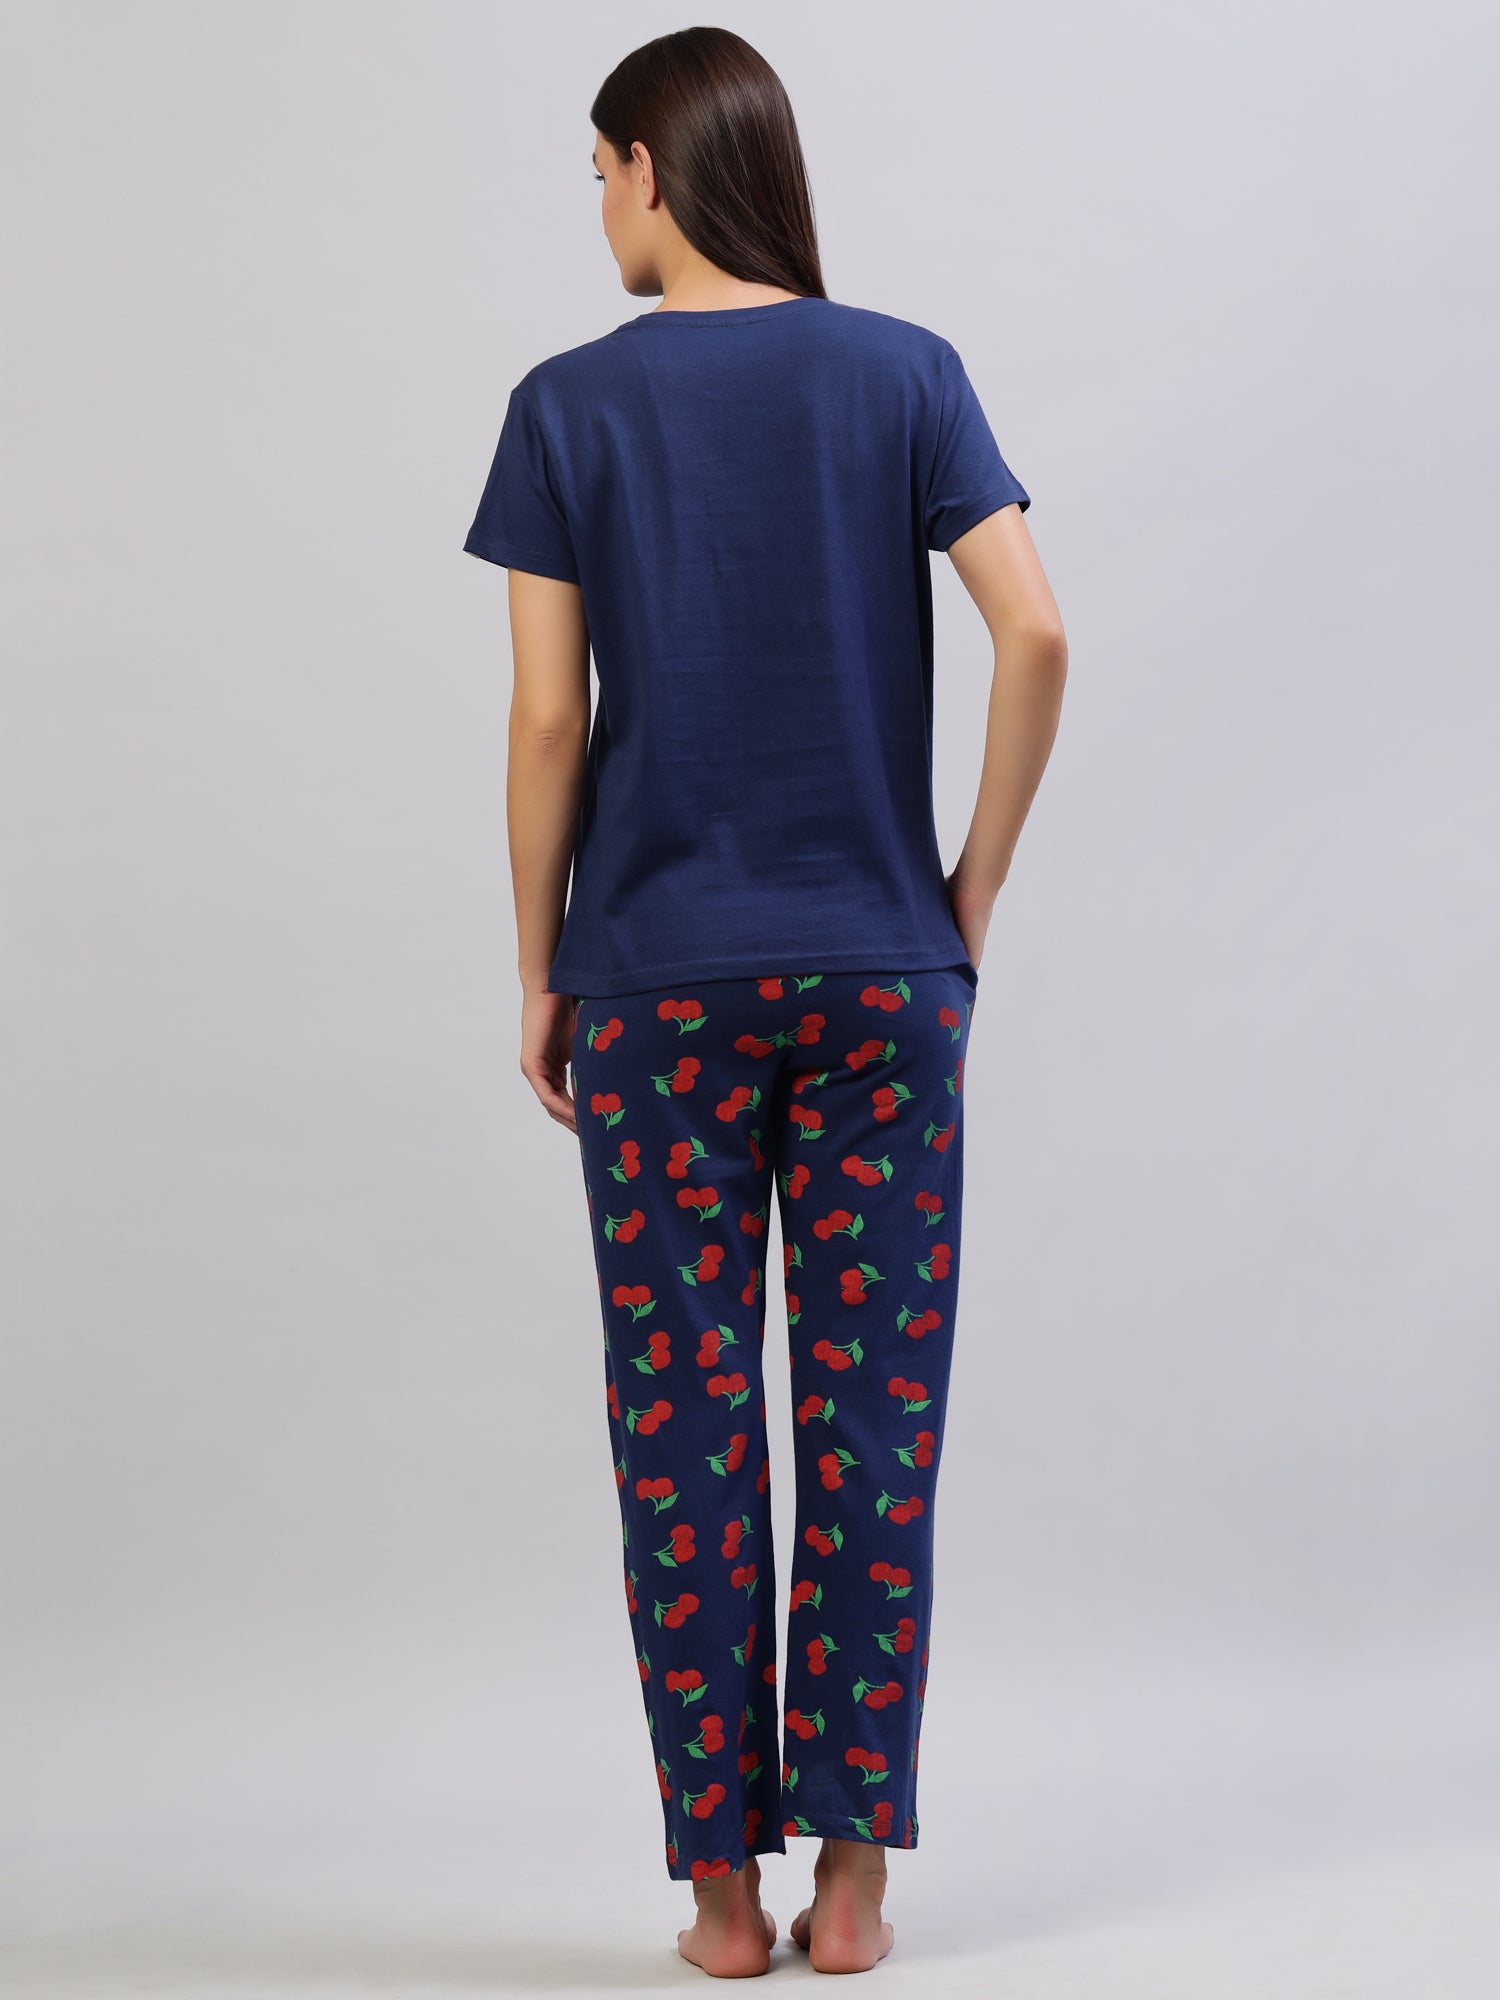 Pyjama set DeepBlue 100% Cotton